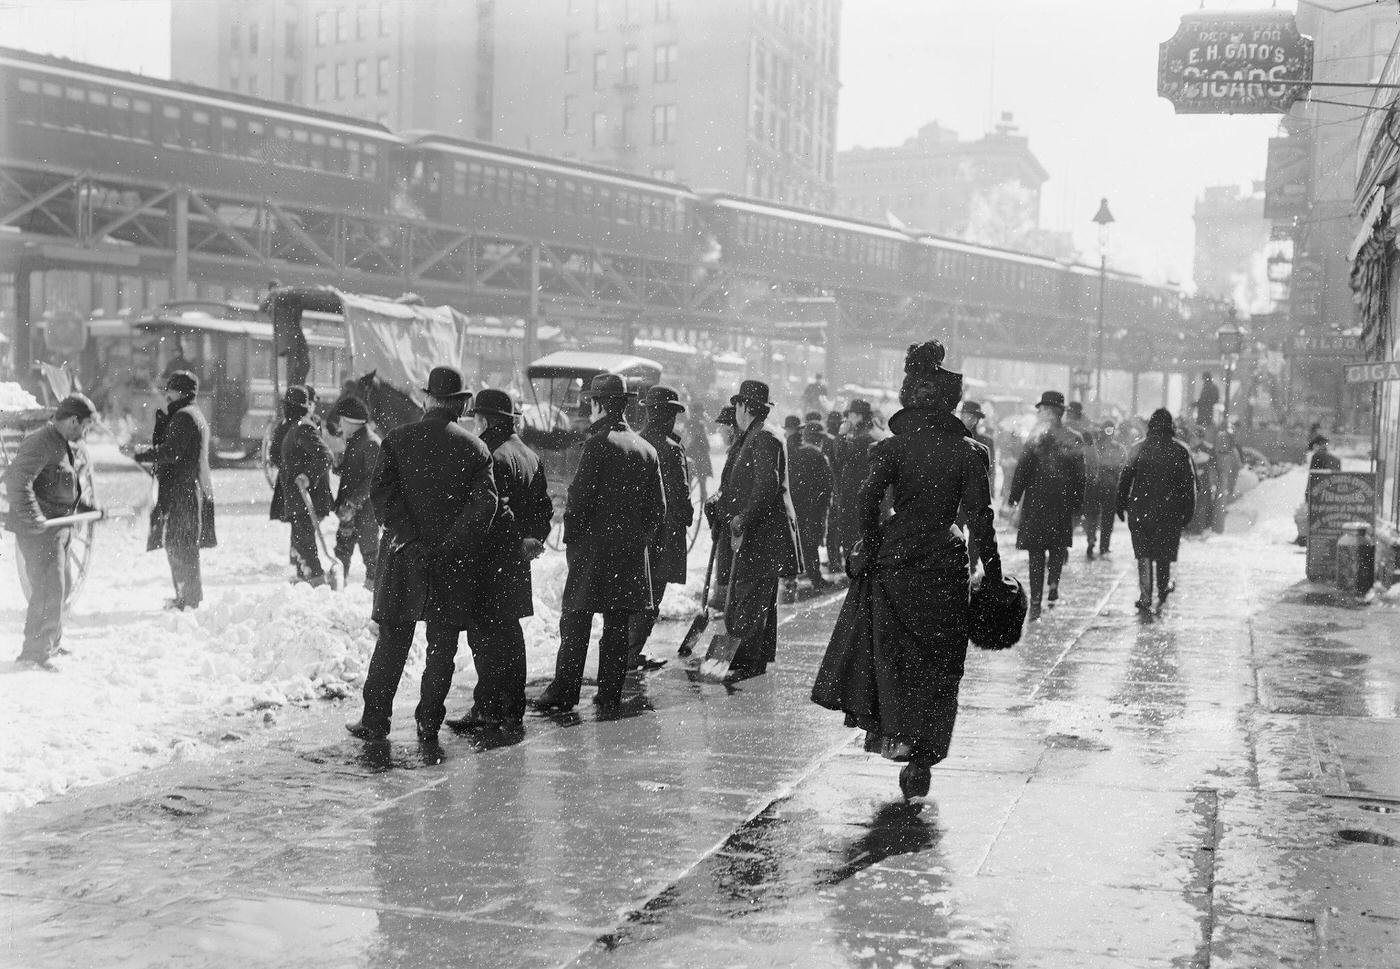 Pedestrians On Street During Blizzard, New York City, 1899